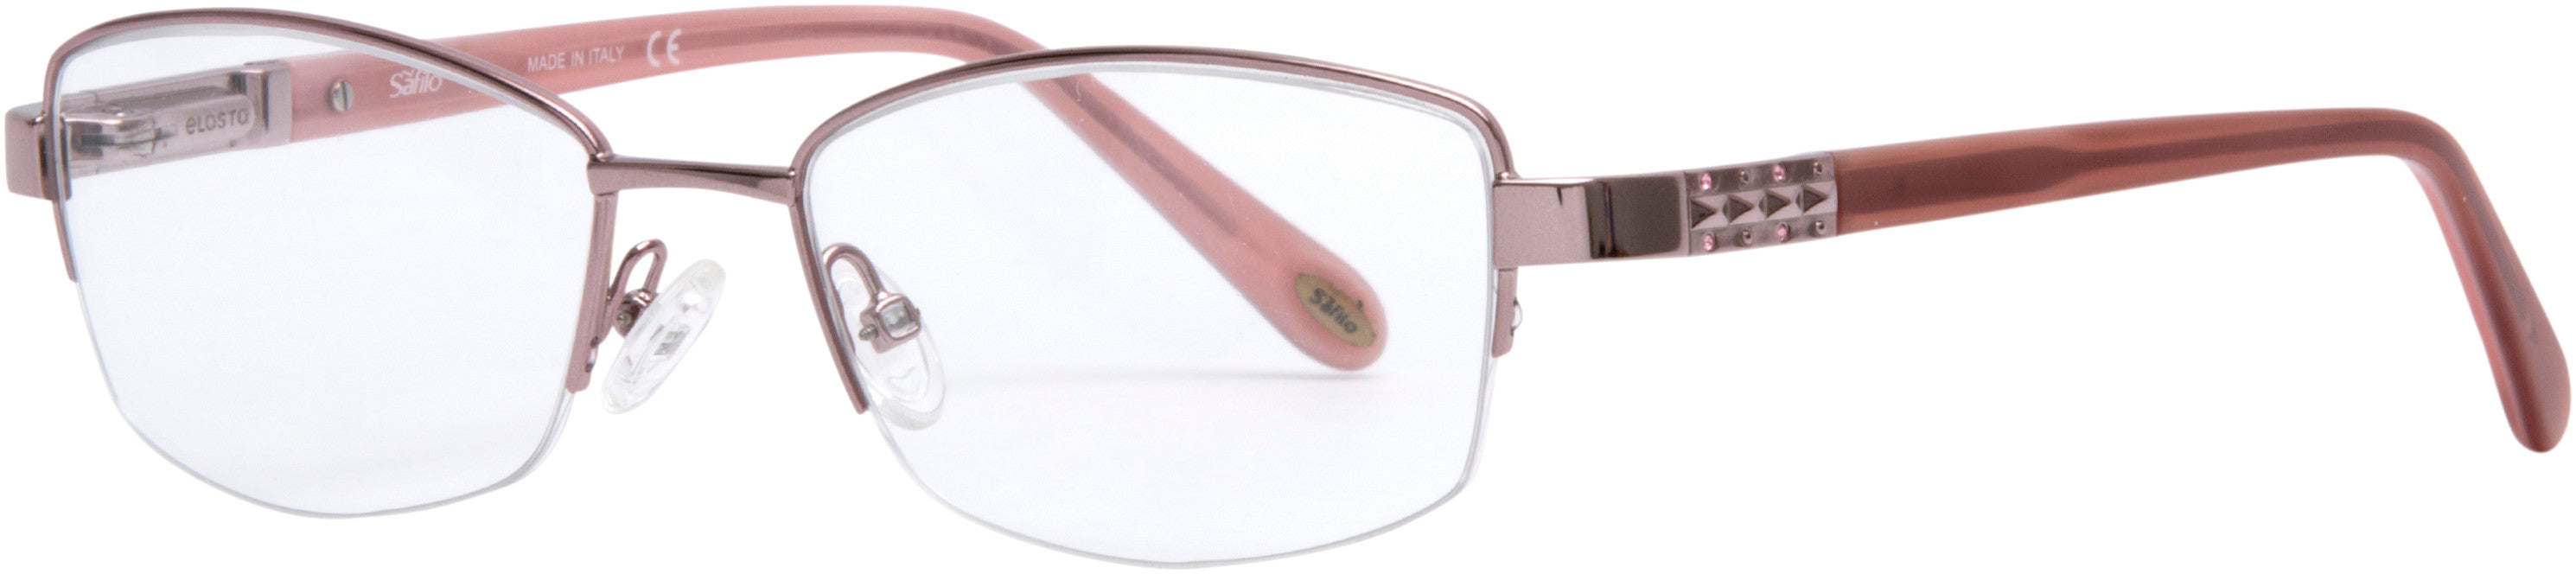  Emozioni 4381 Rectangular Eyeglasses 0S8R-0S8R  Light Pink (00 Demo Lens)